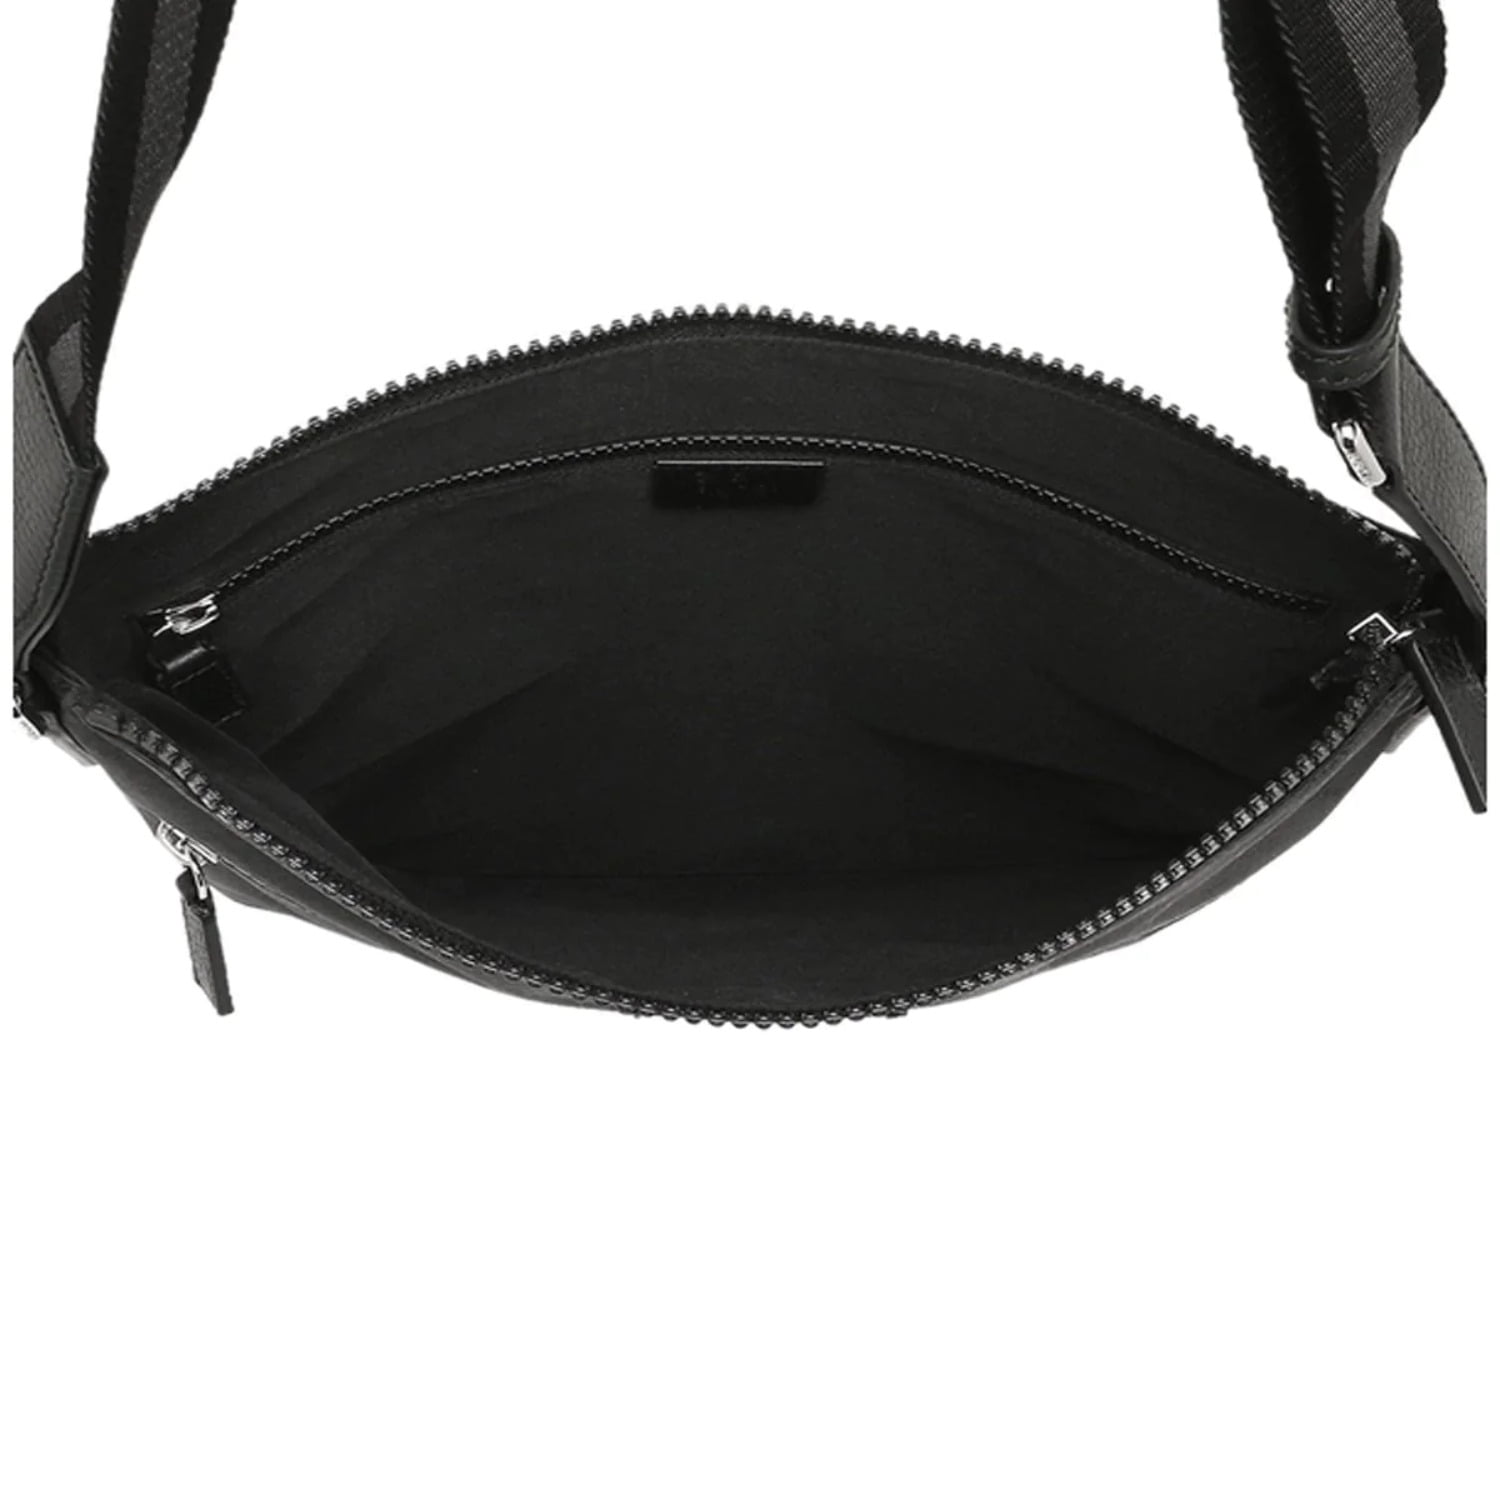 Hot Gucci'''sss Black Messenger Bag Women's Messenger Bag Men's Shoulder Bag  - China Woman Handbag and Luxury Bag price